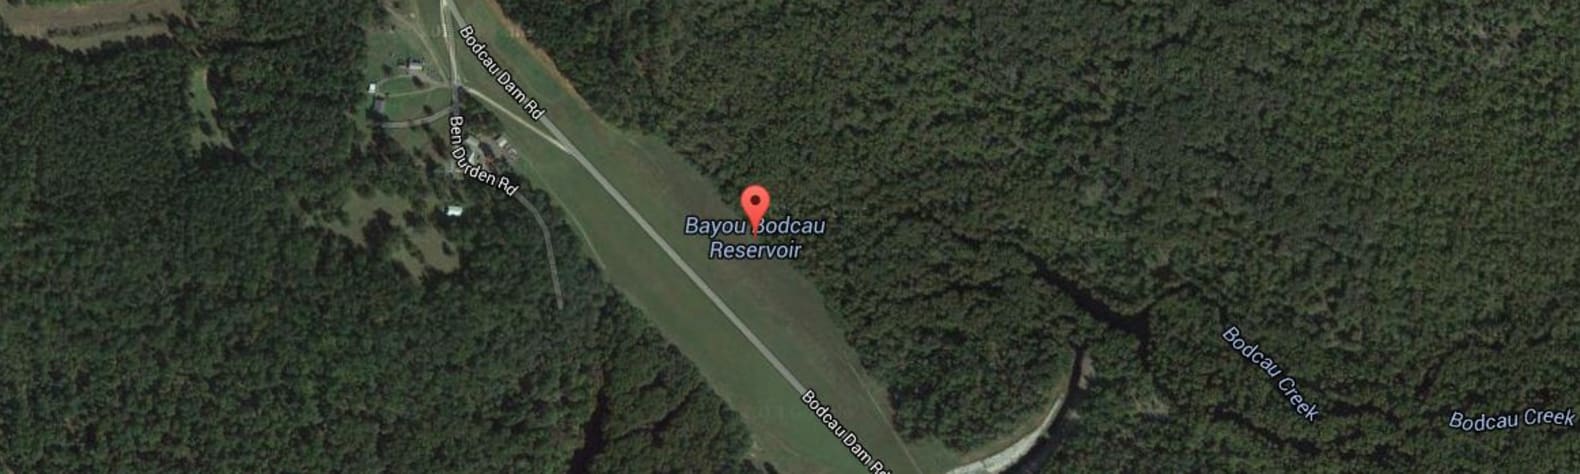 Bayou Bodcau Reservoir